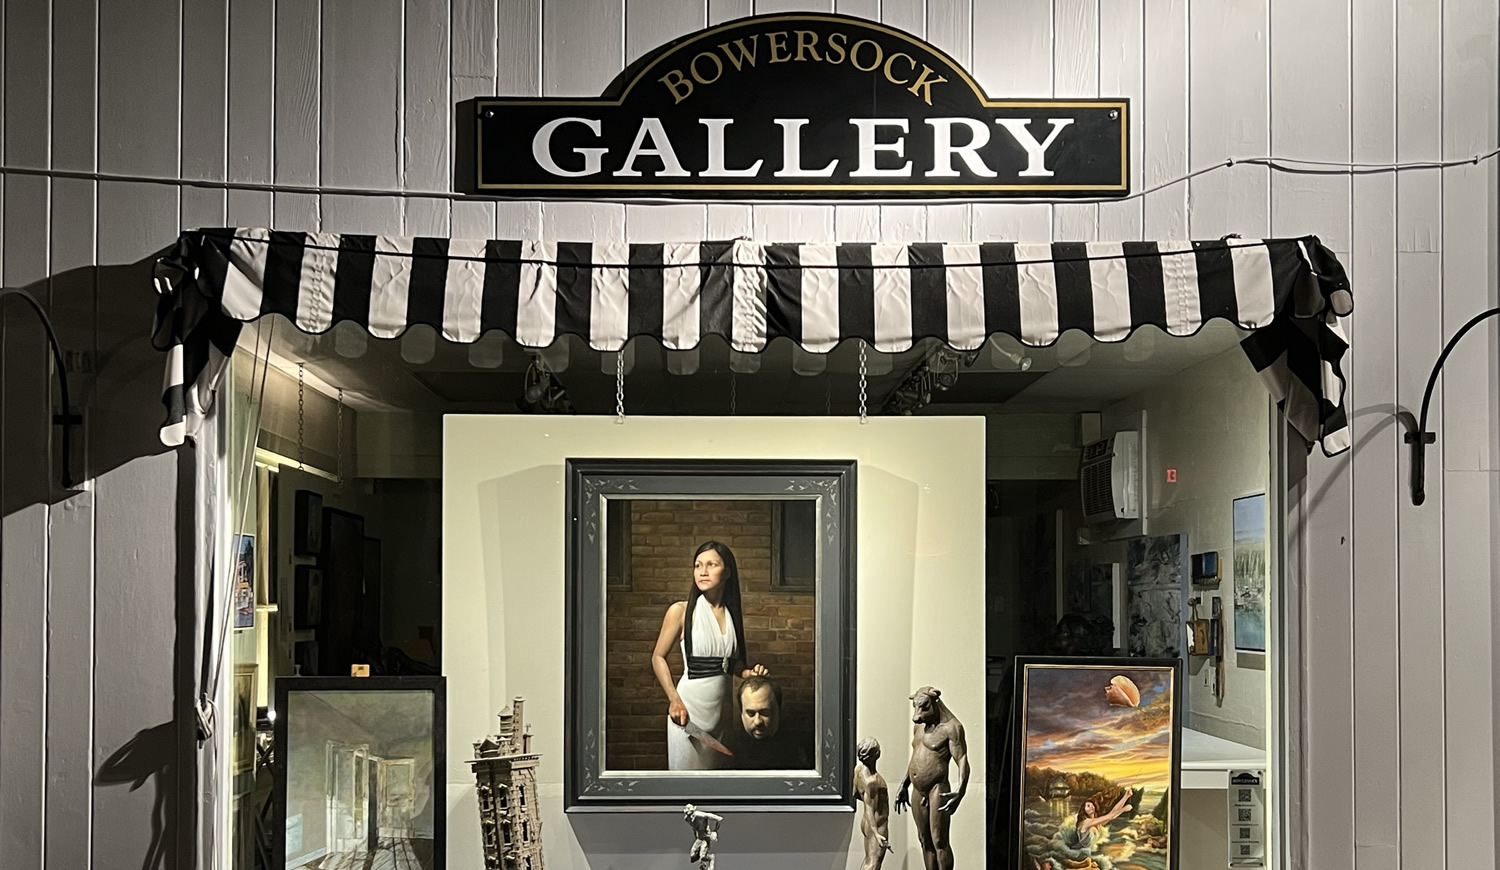 Bowersock Gallery